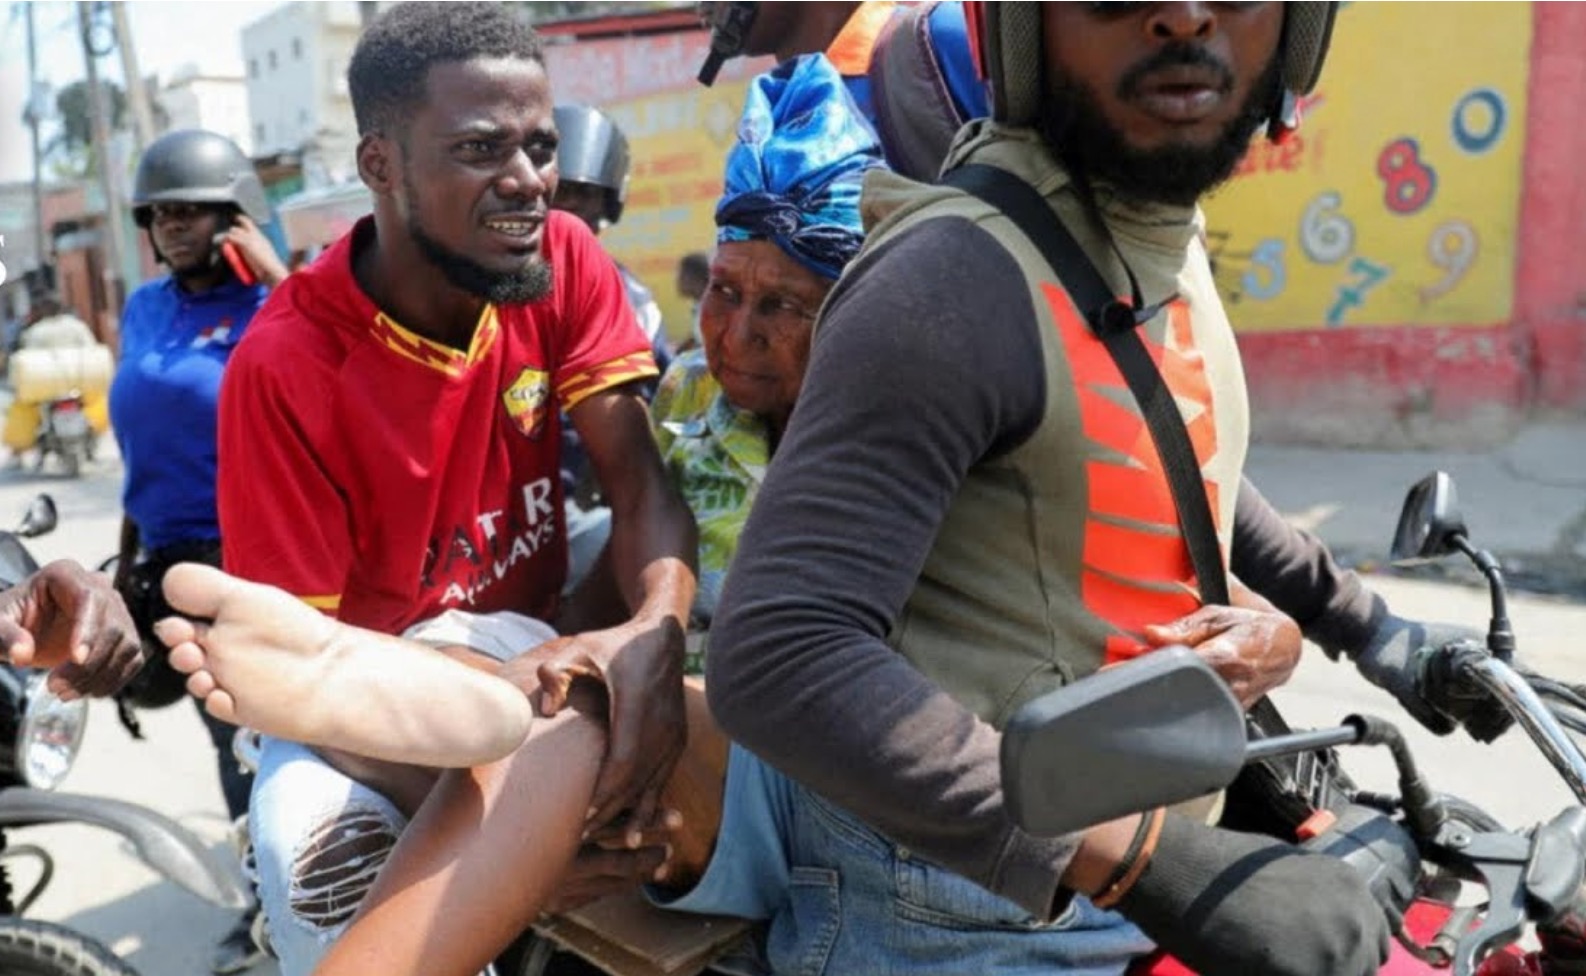 Inside Haiti's Crisis: The Latest Scenes - Watch Report